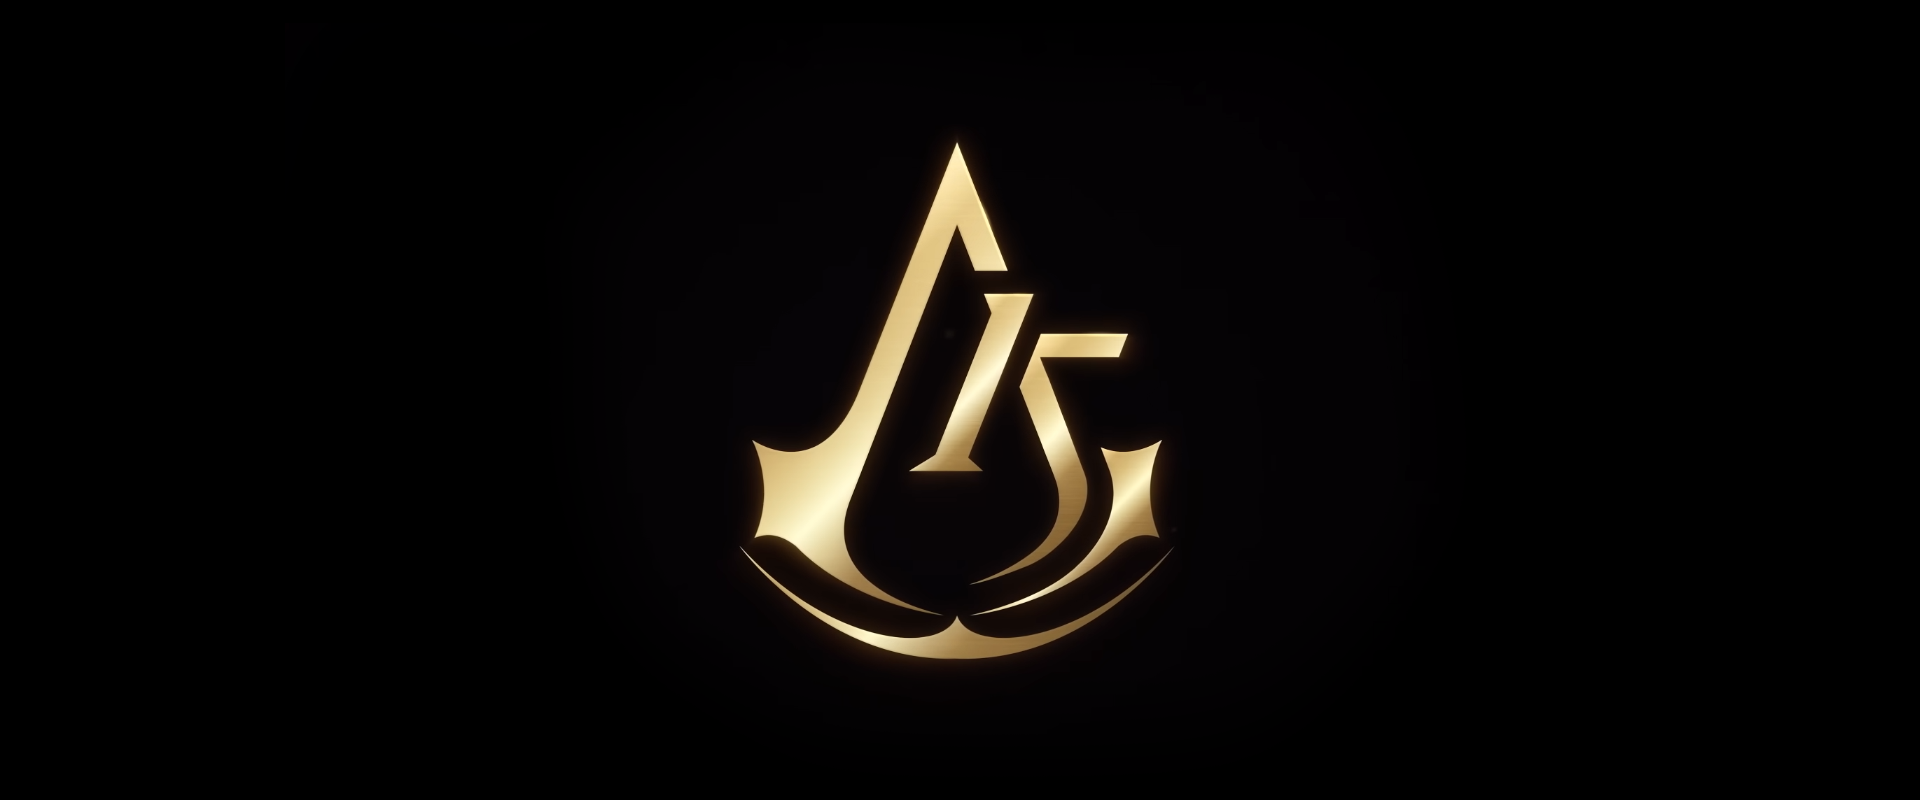 Assassin's Creed 15th Anniversary Art Direction styleguide UI Branding